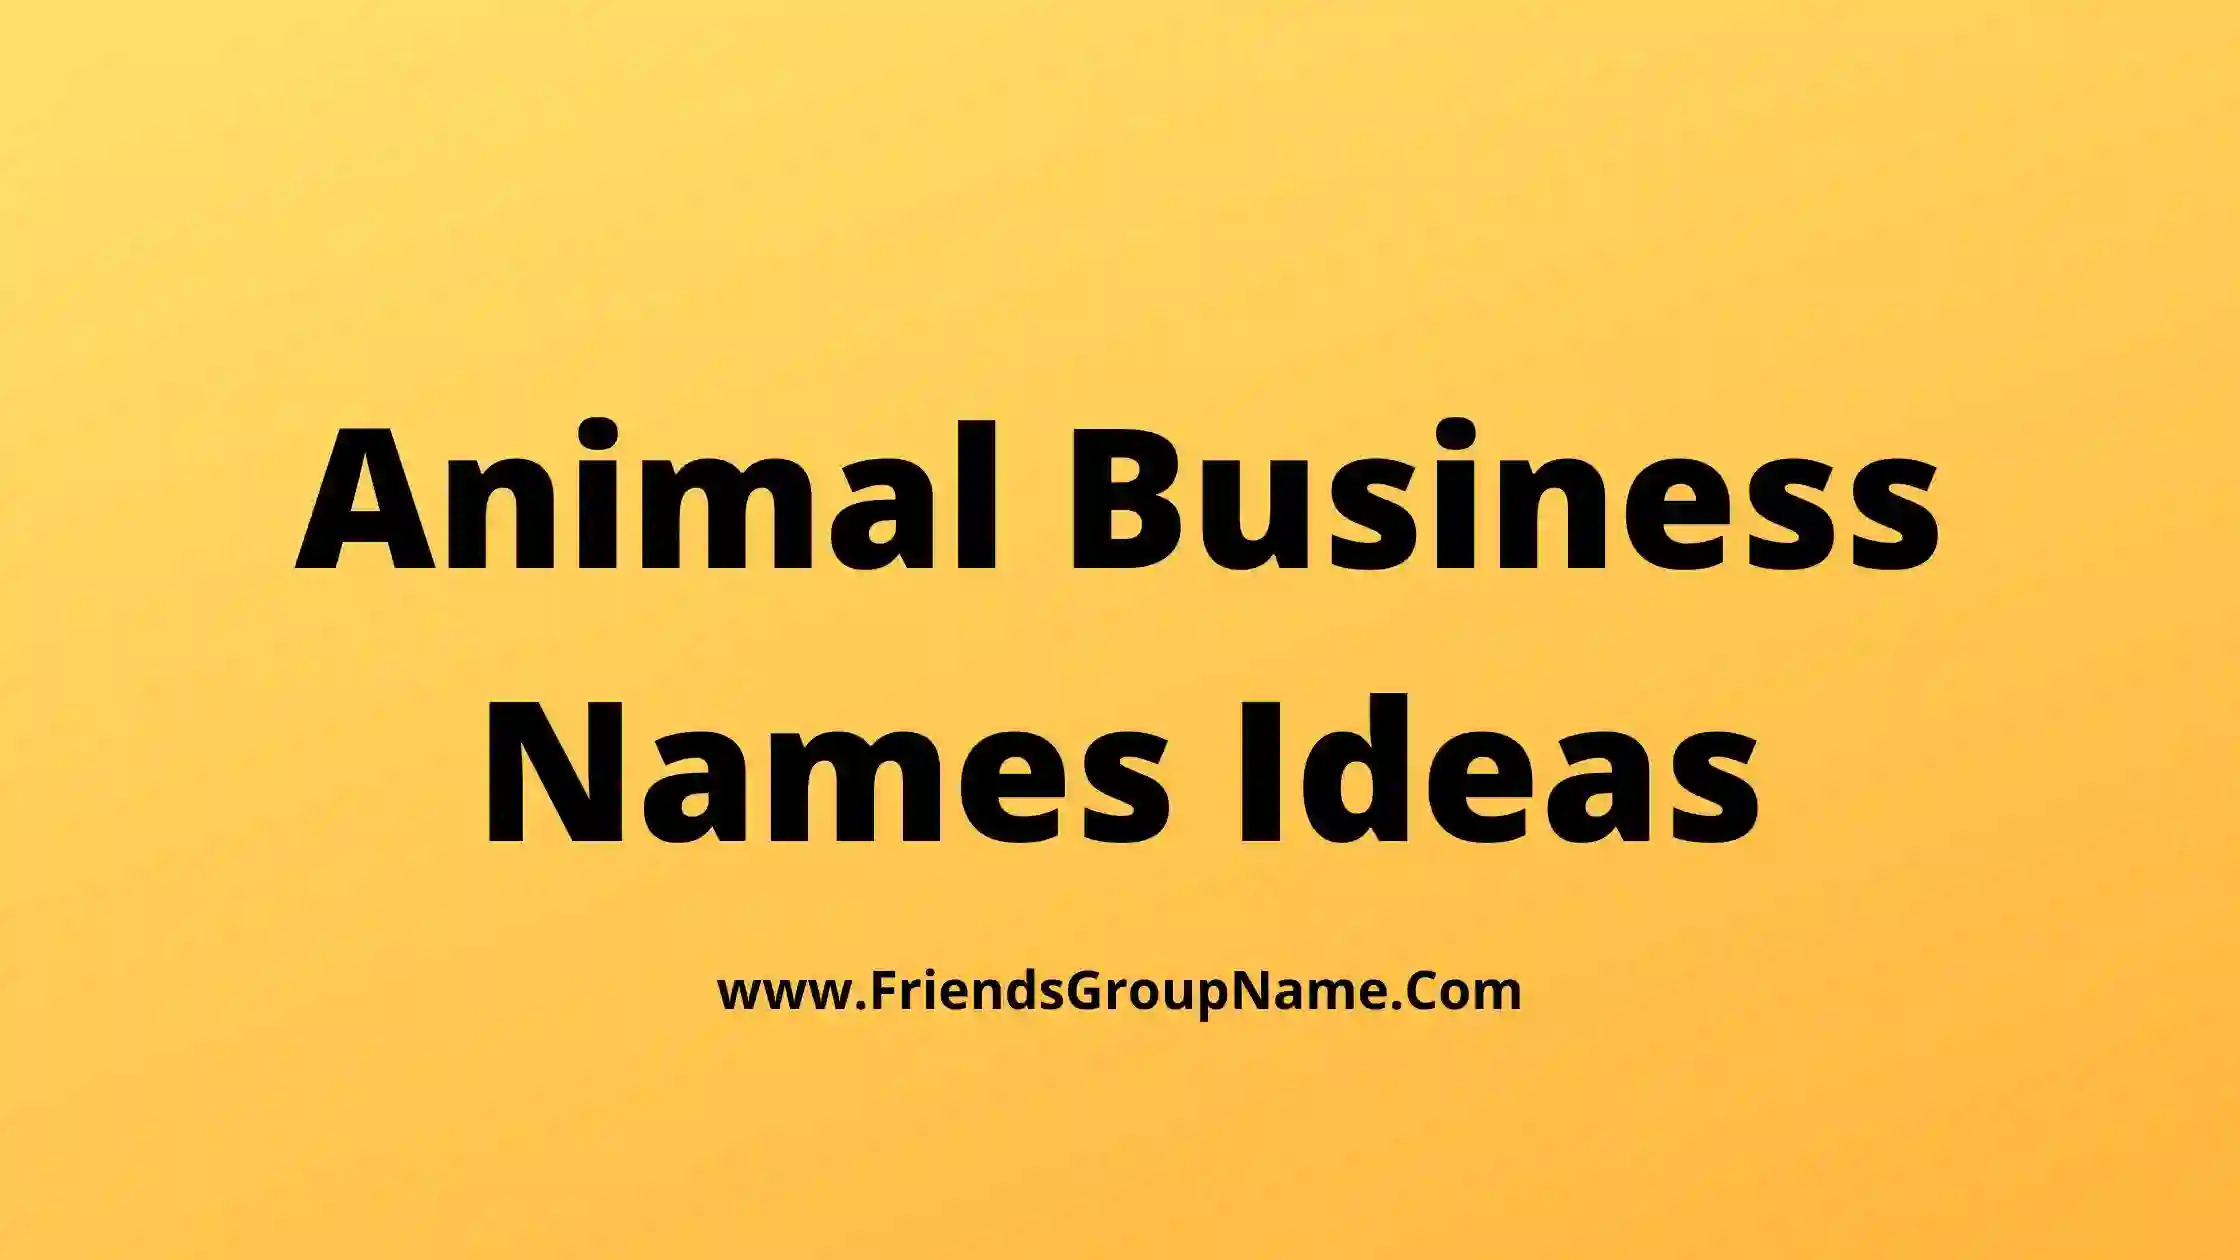 Animal Business Names Ideas